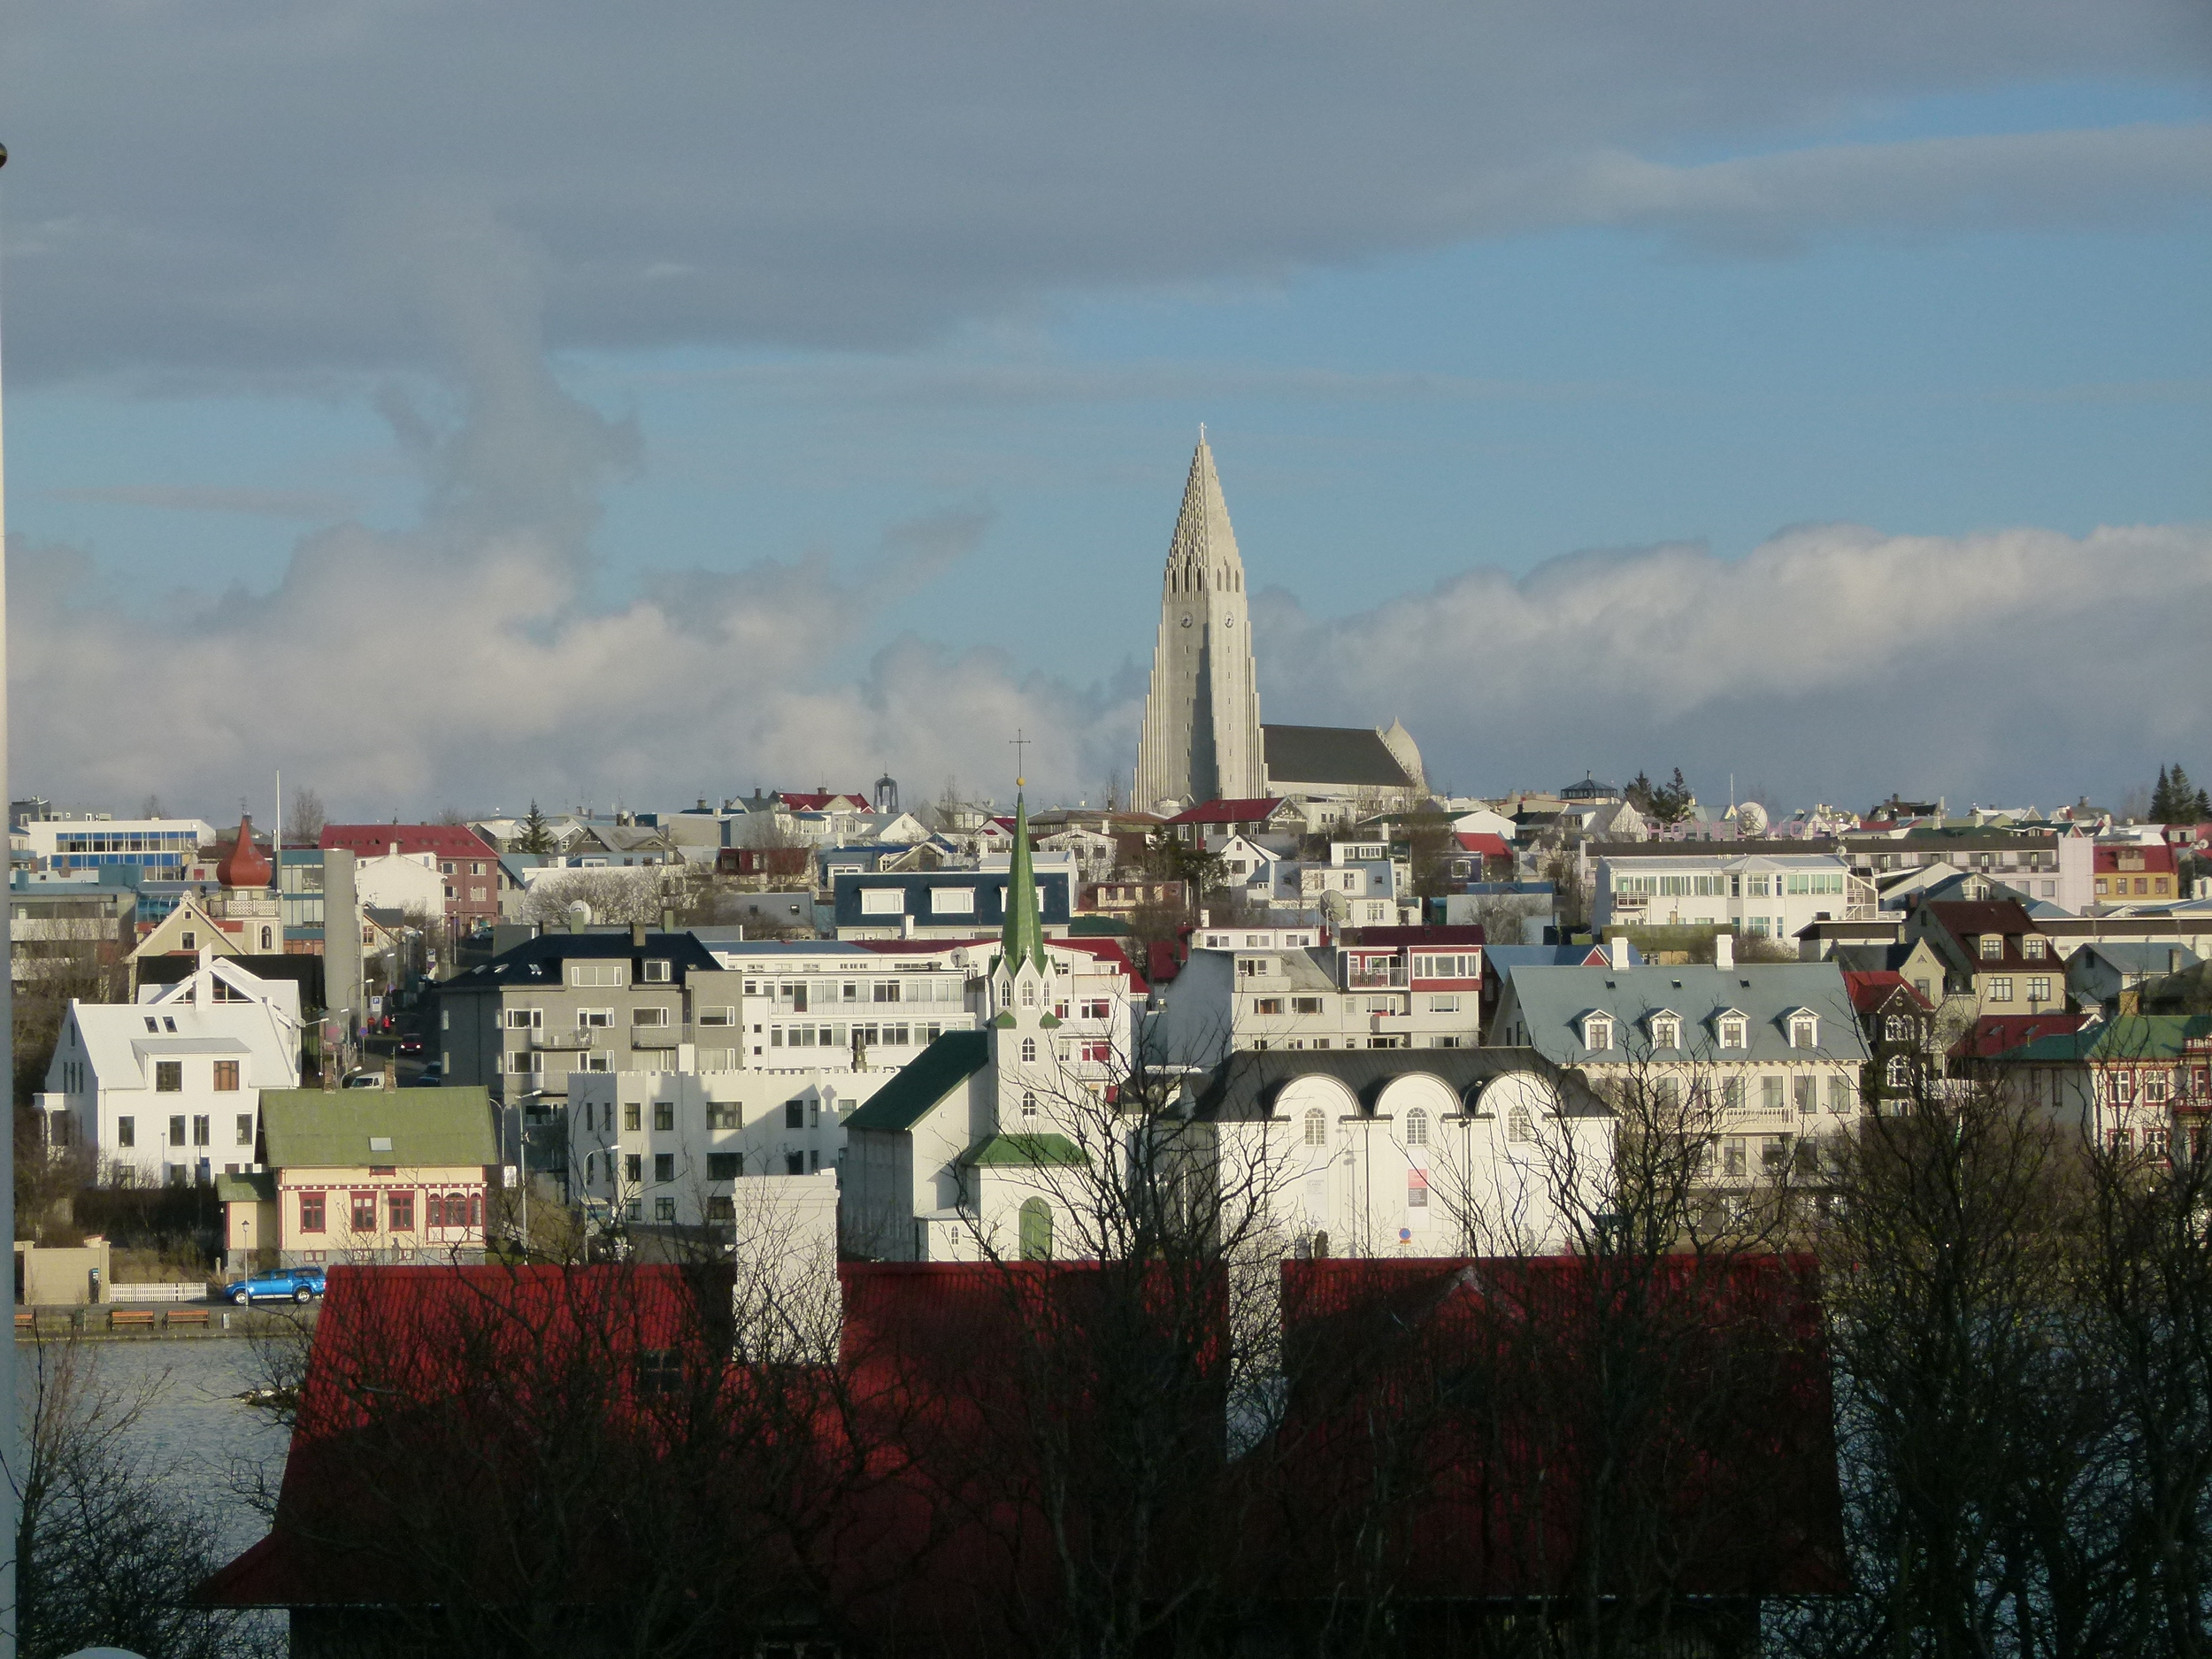 Reykjavick, Iceland